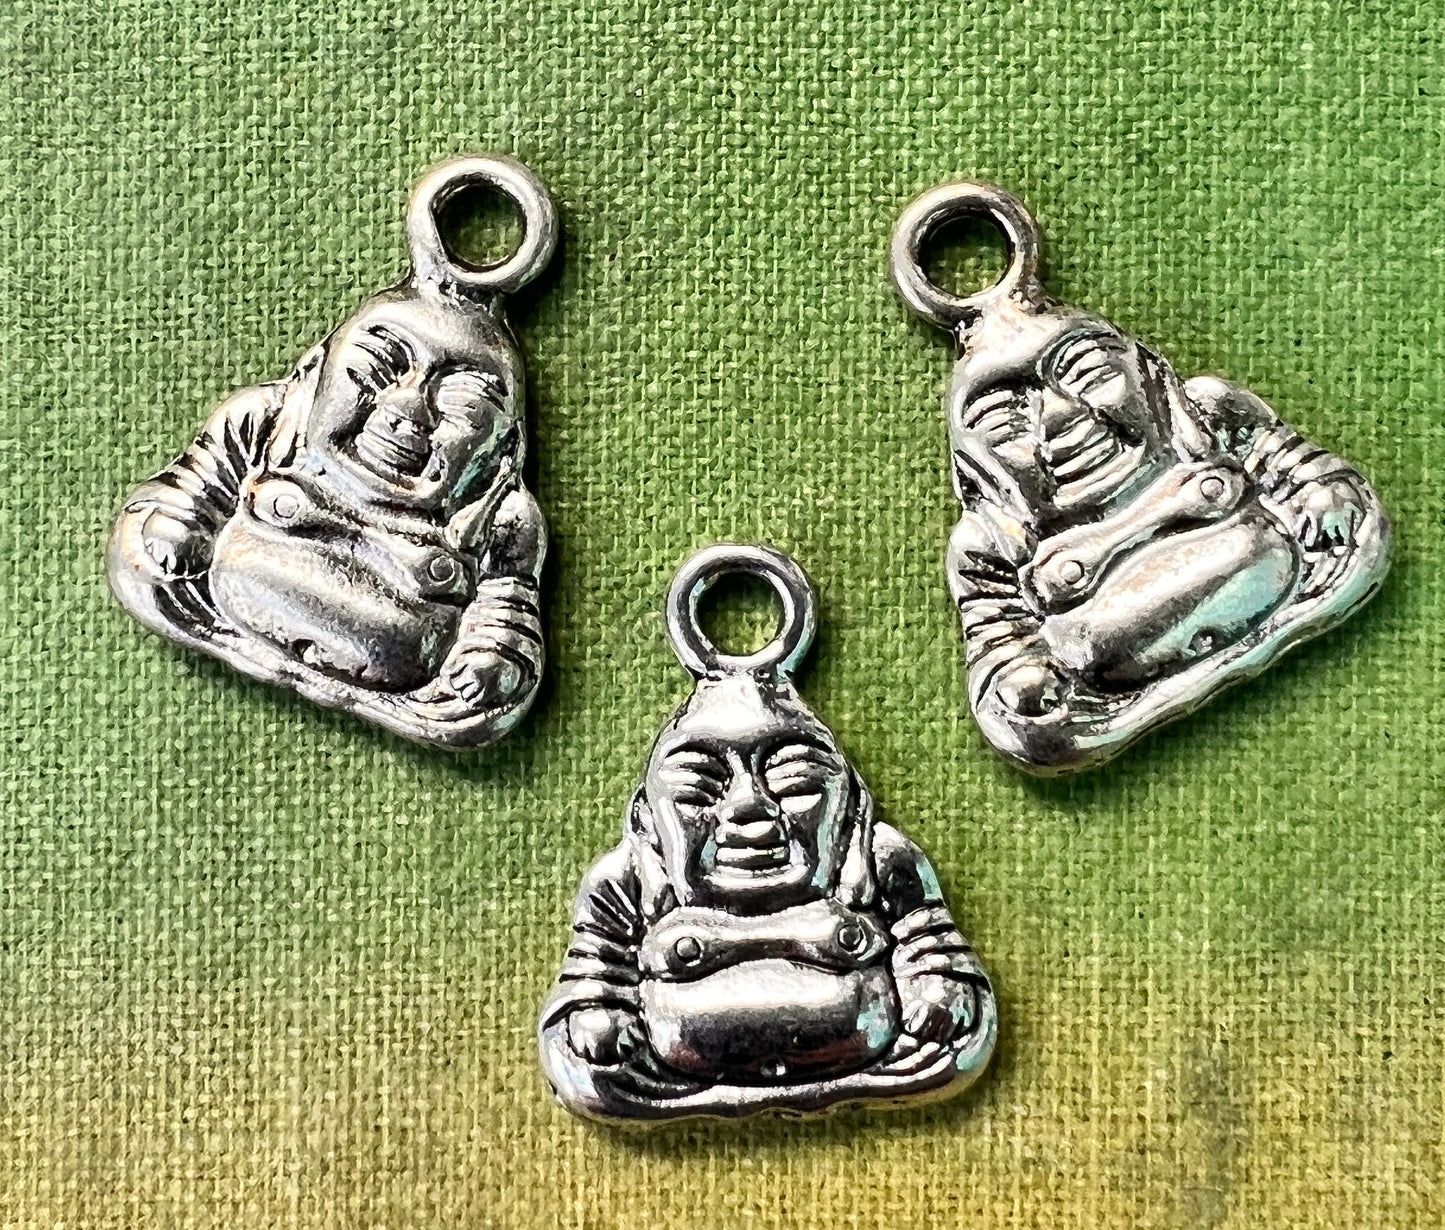 3cm tall Silver Tone  Buddha Charms / Pendants - 3 of them